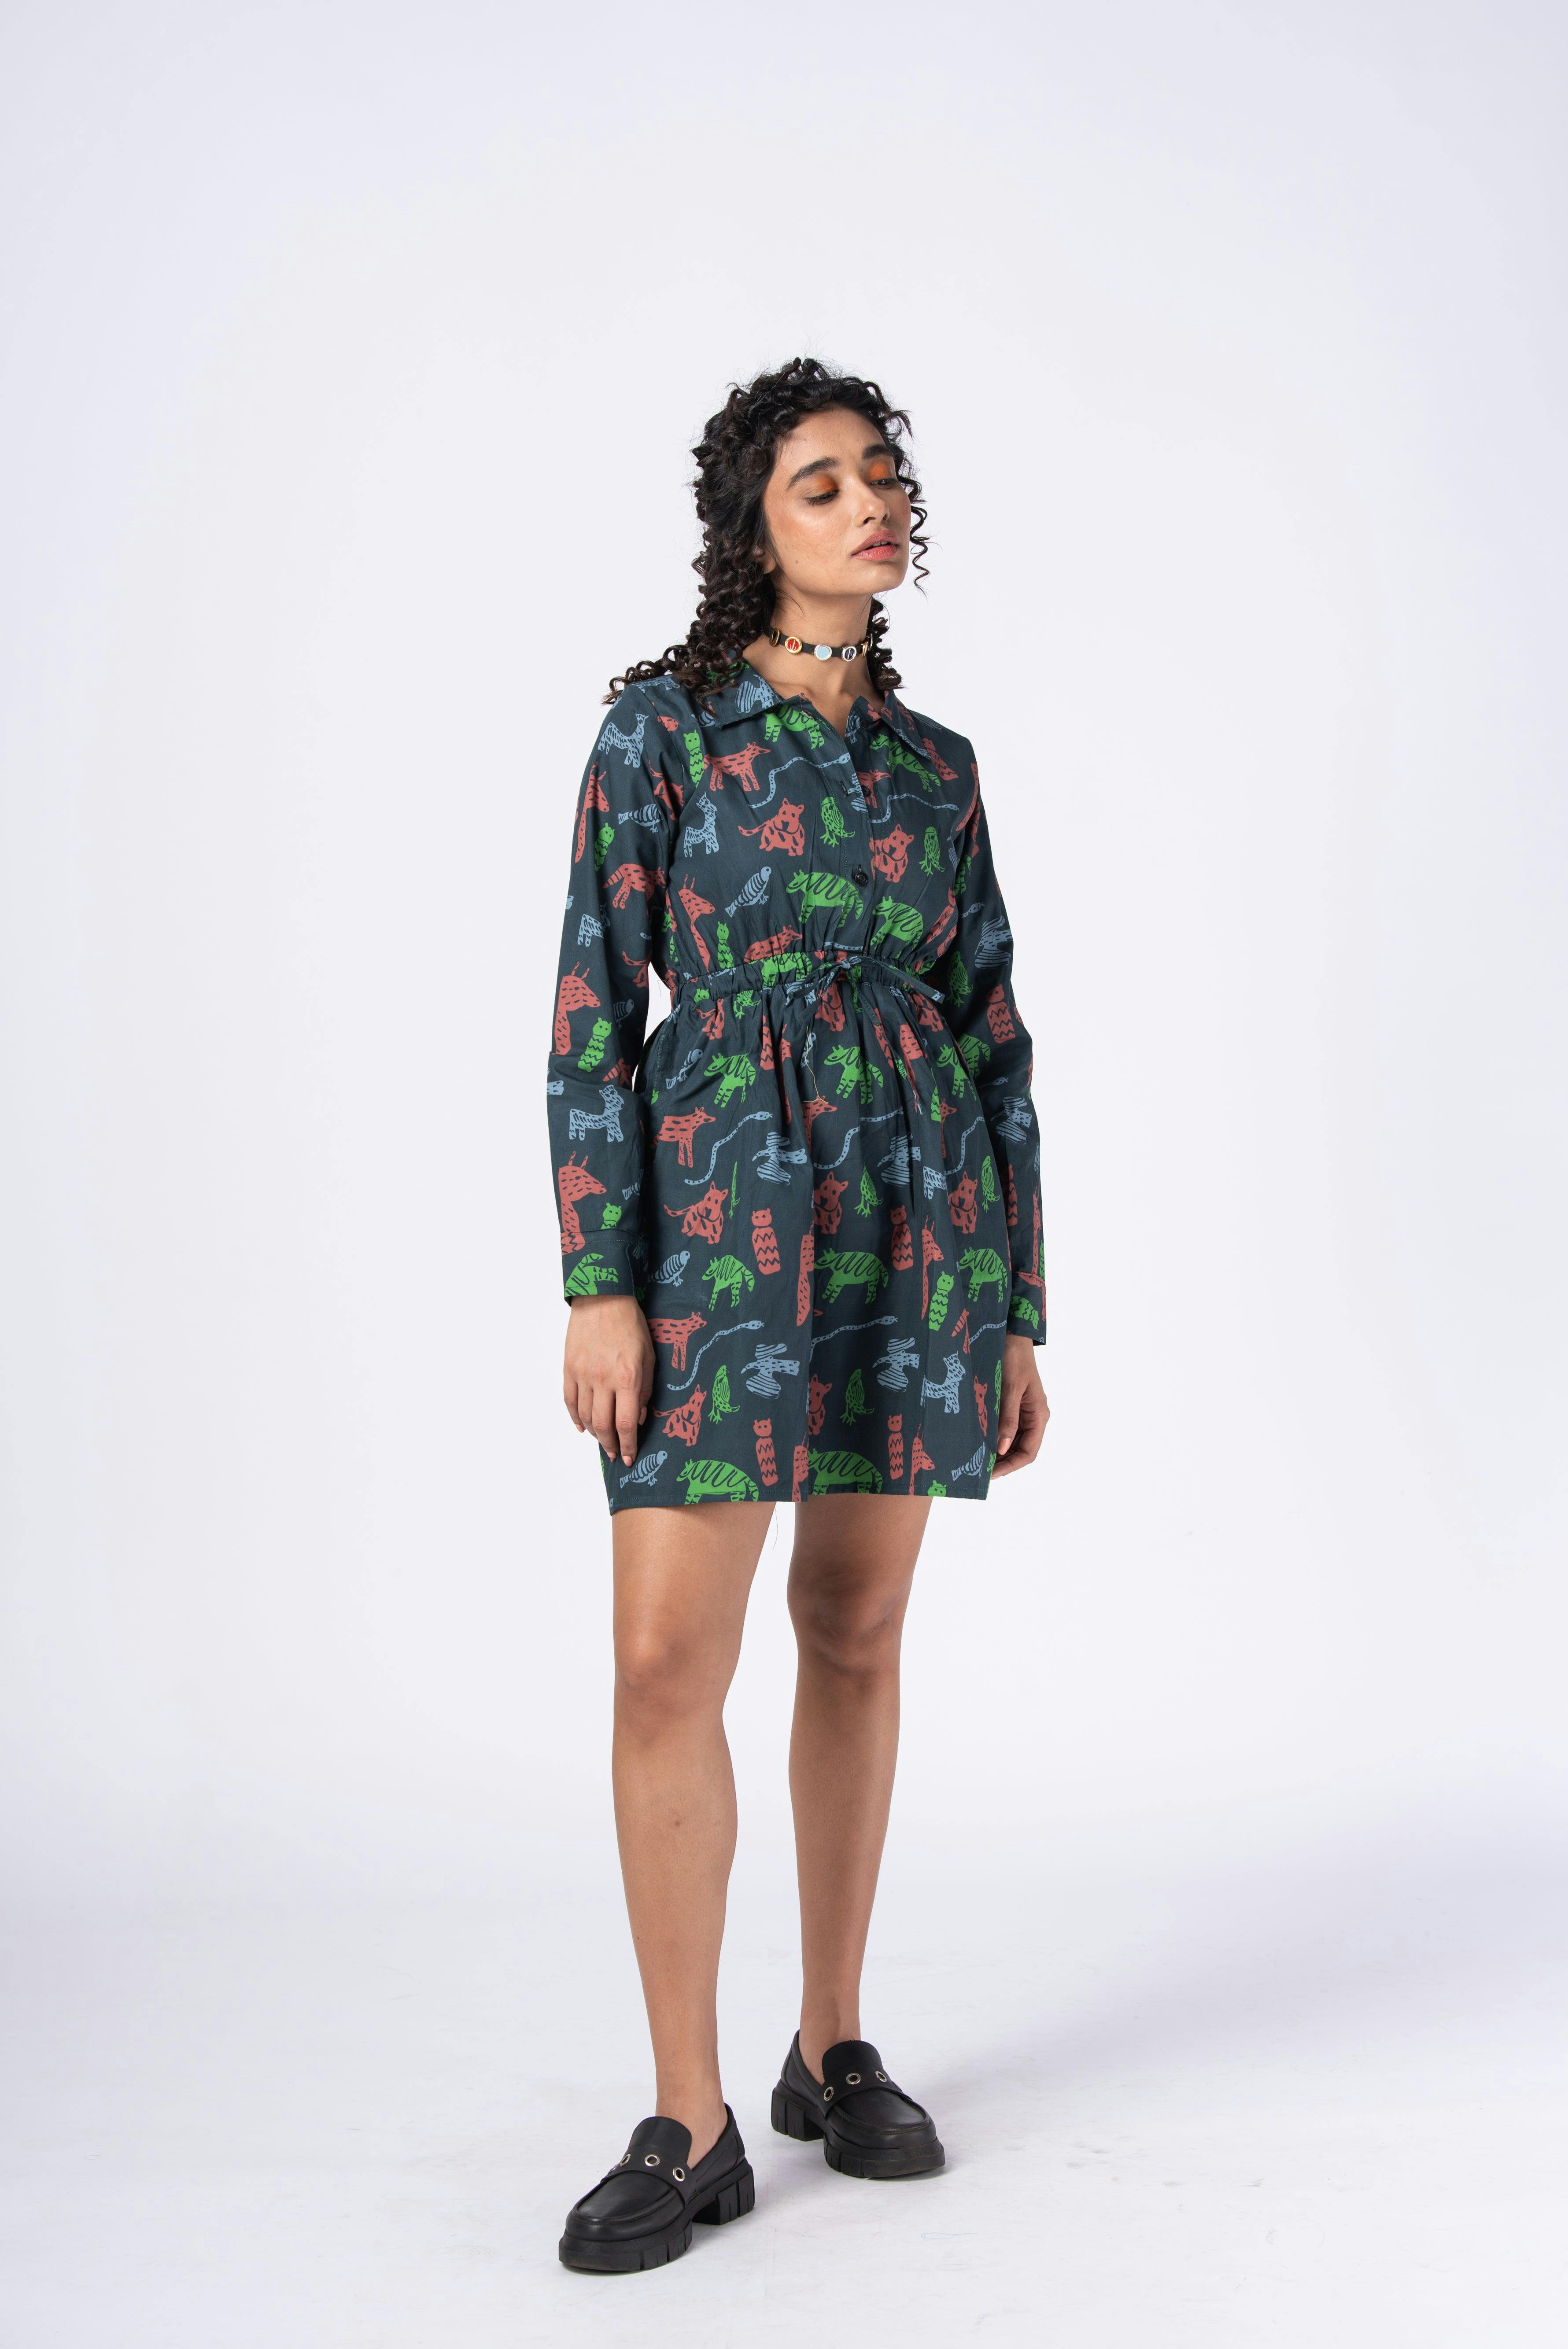 Jungle [short dress], a product by Radharaman